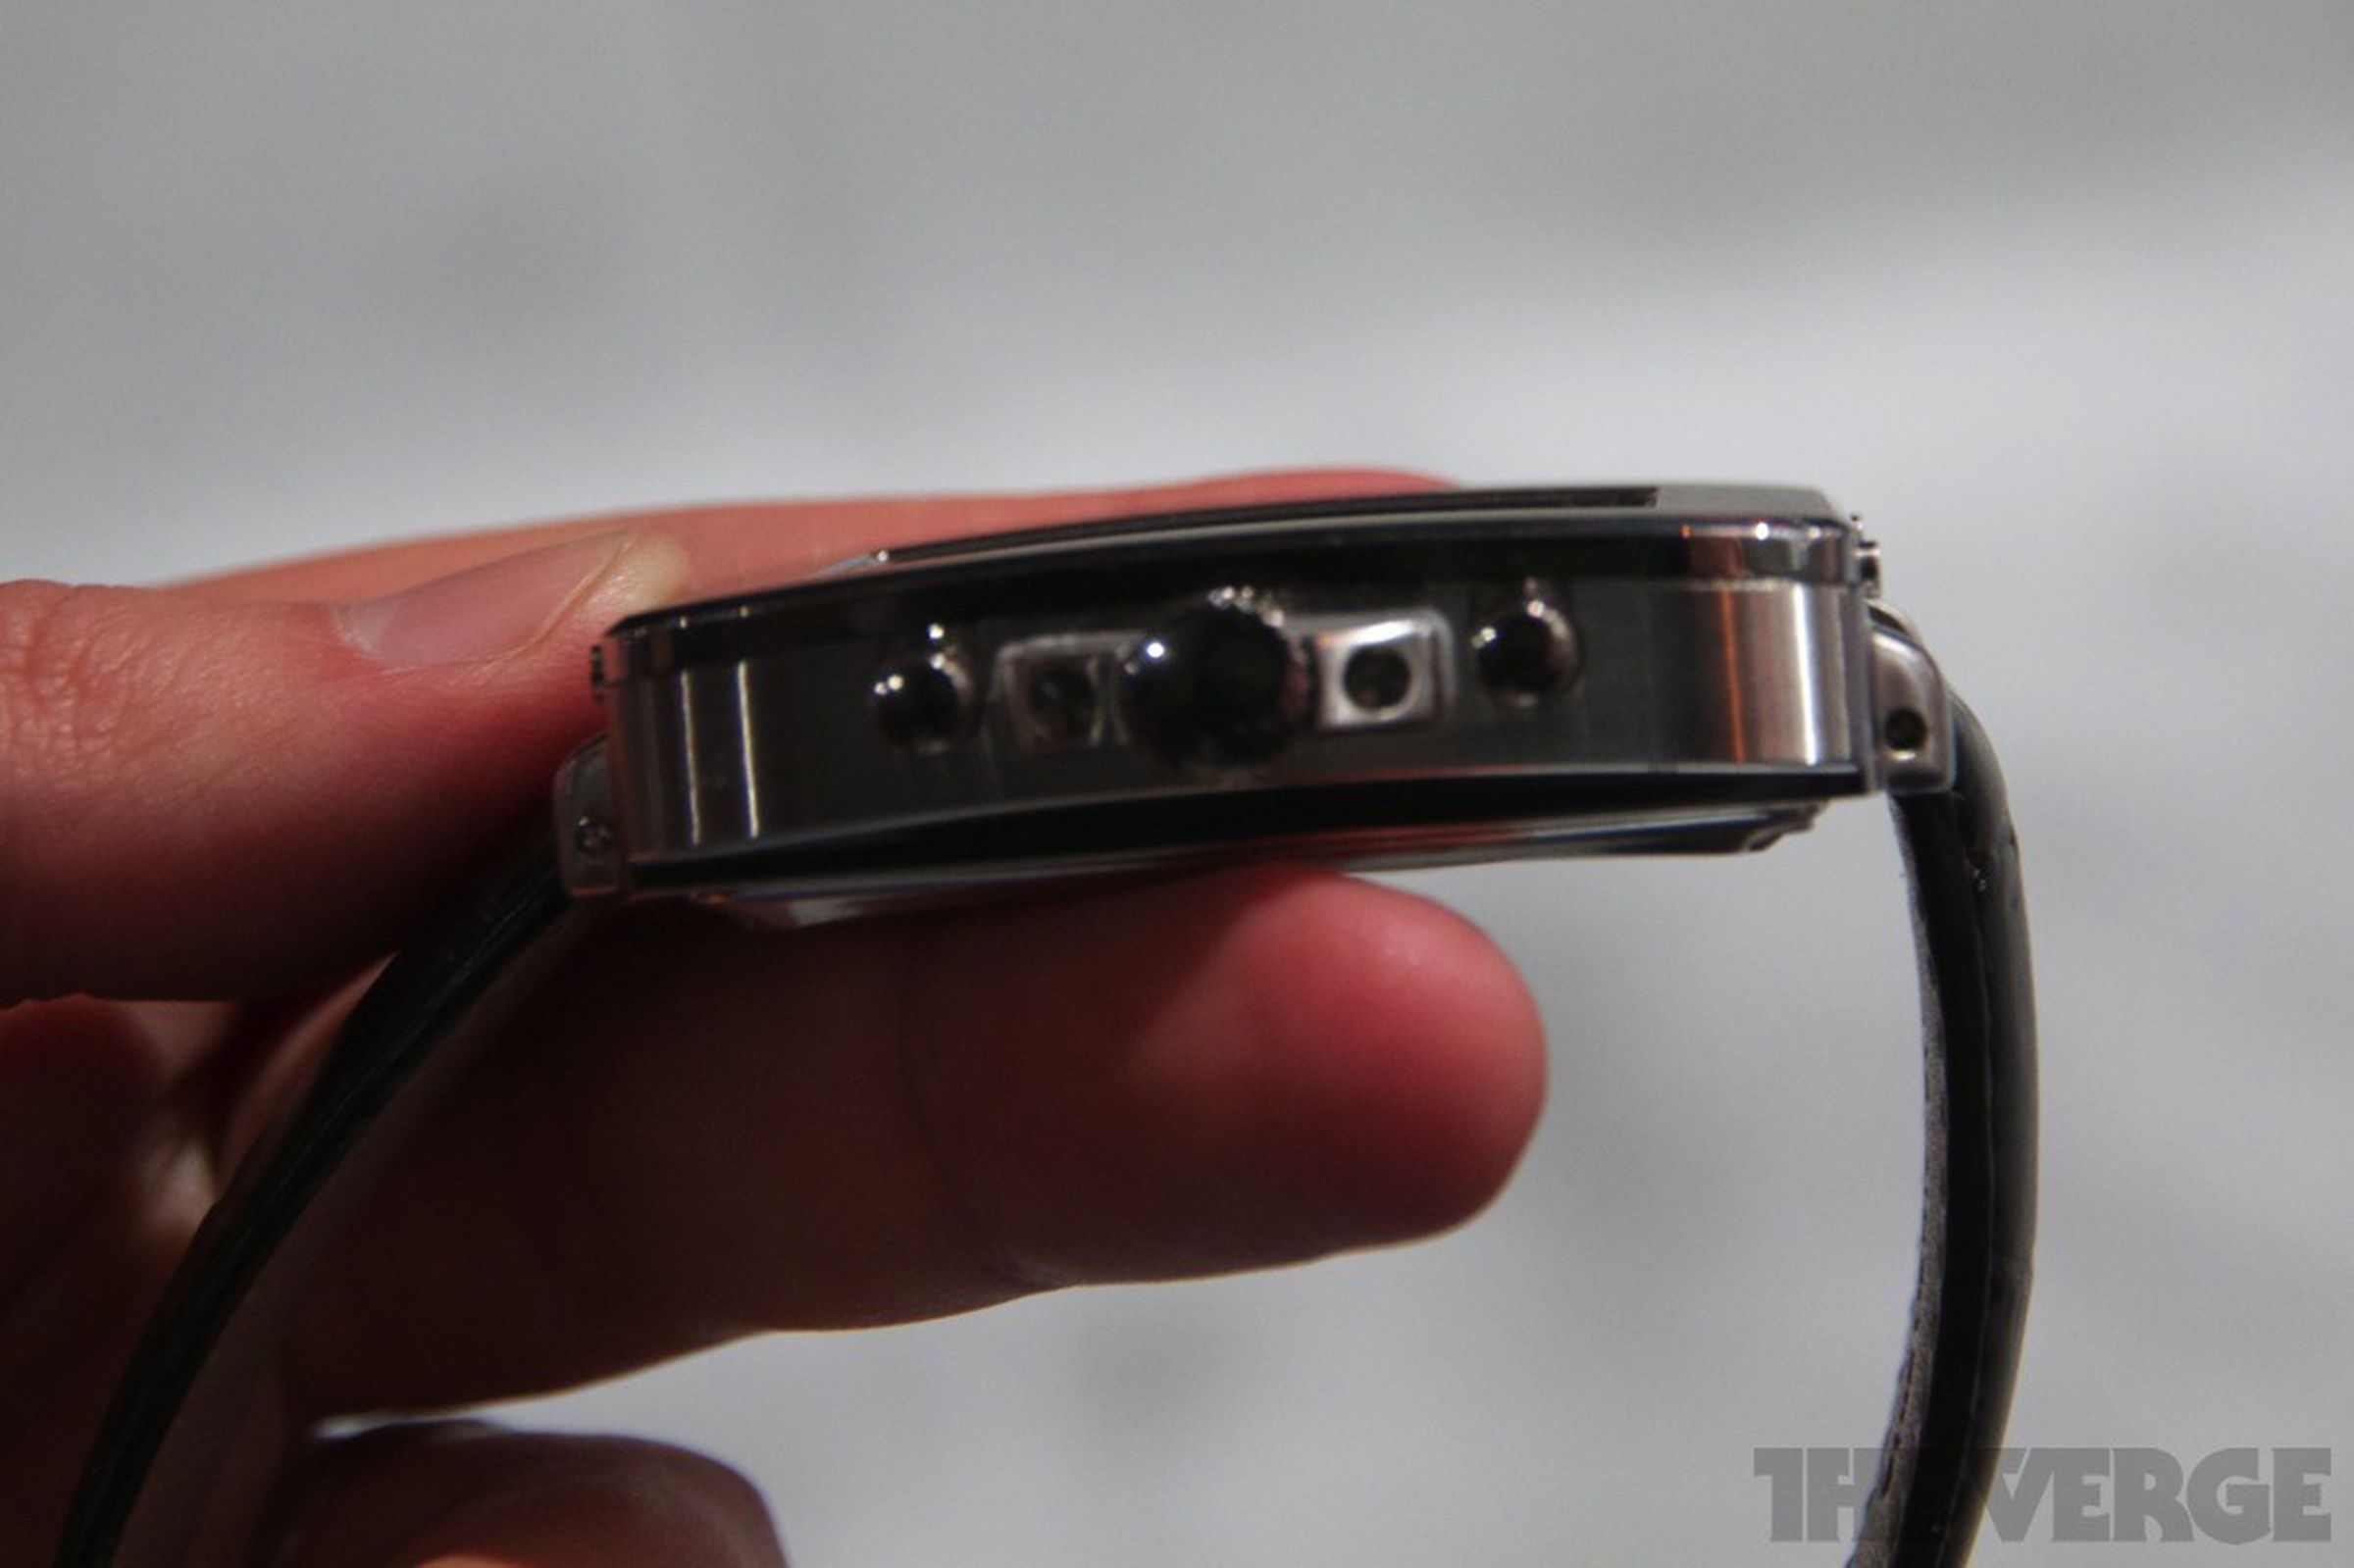 Toshiba smartwatch prototype hands-on photos